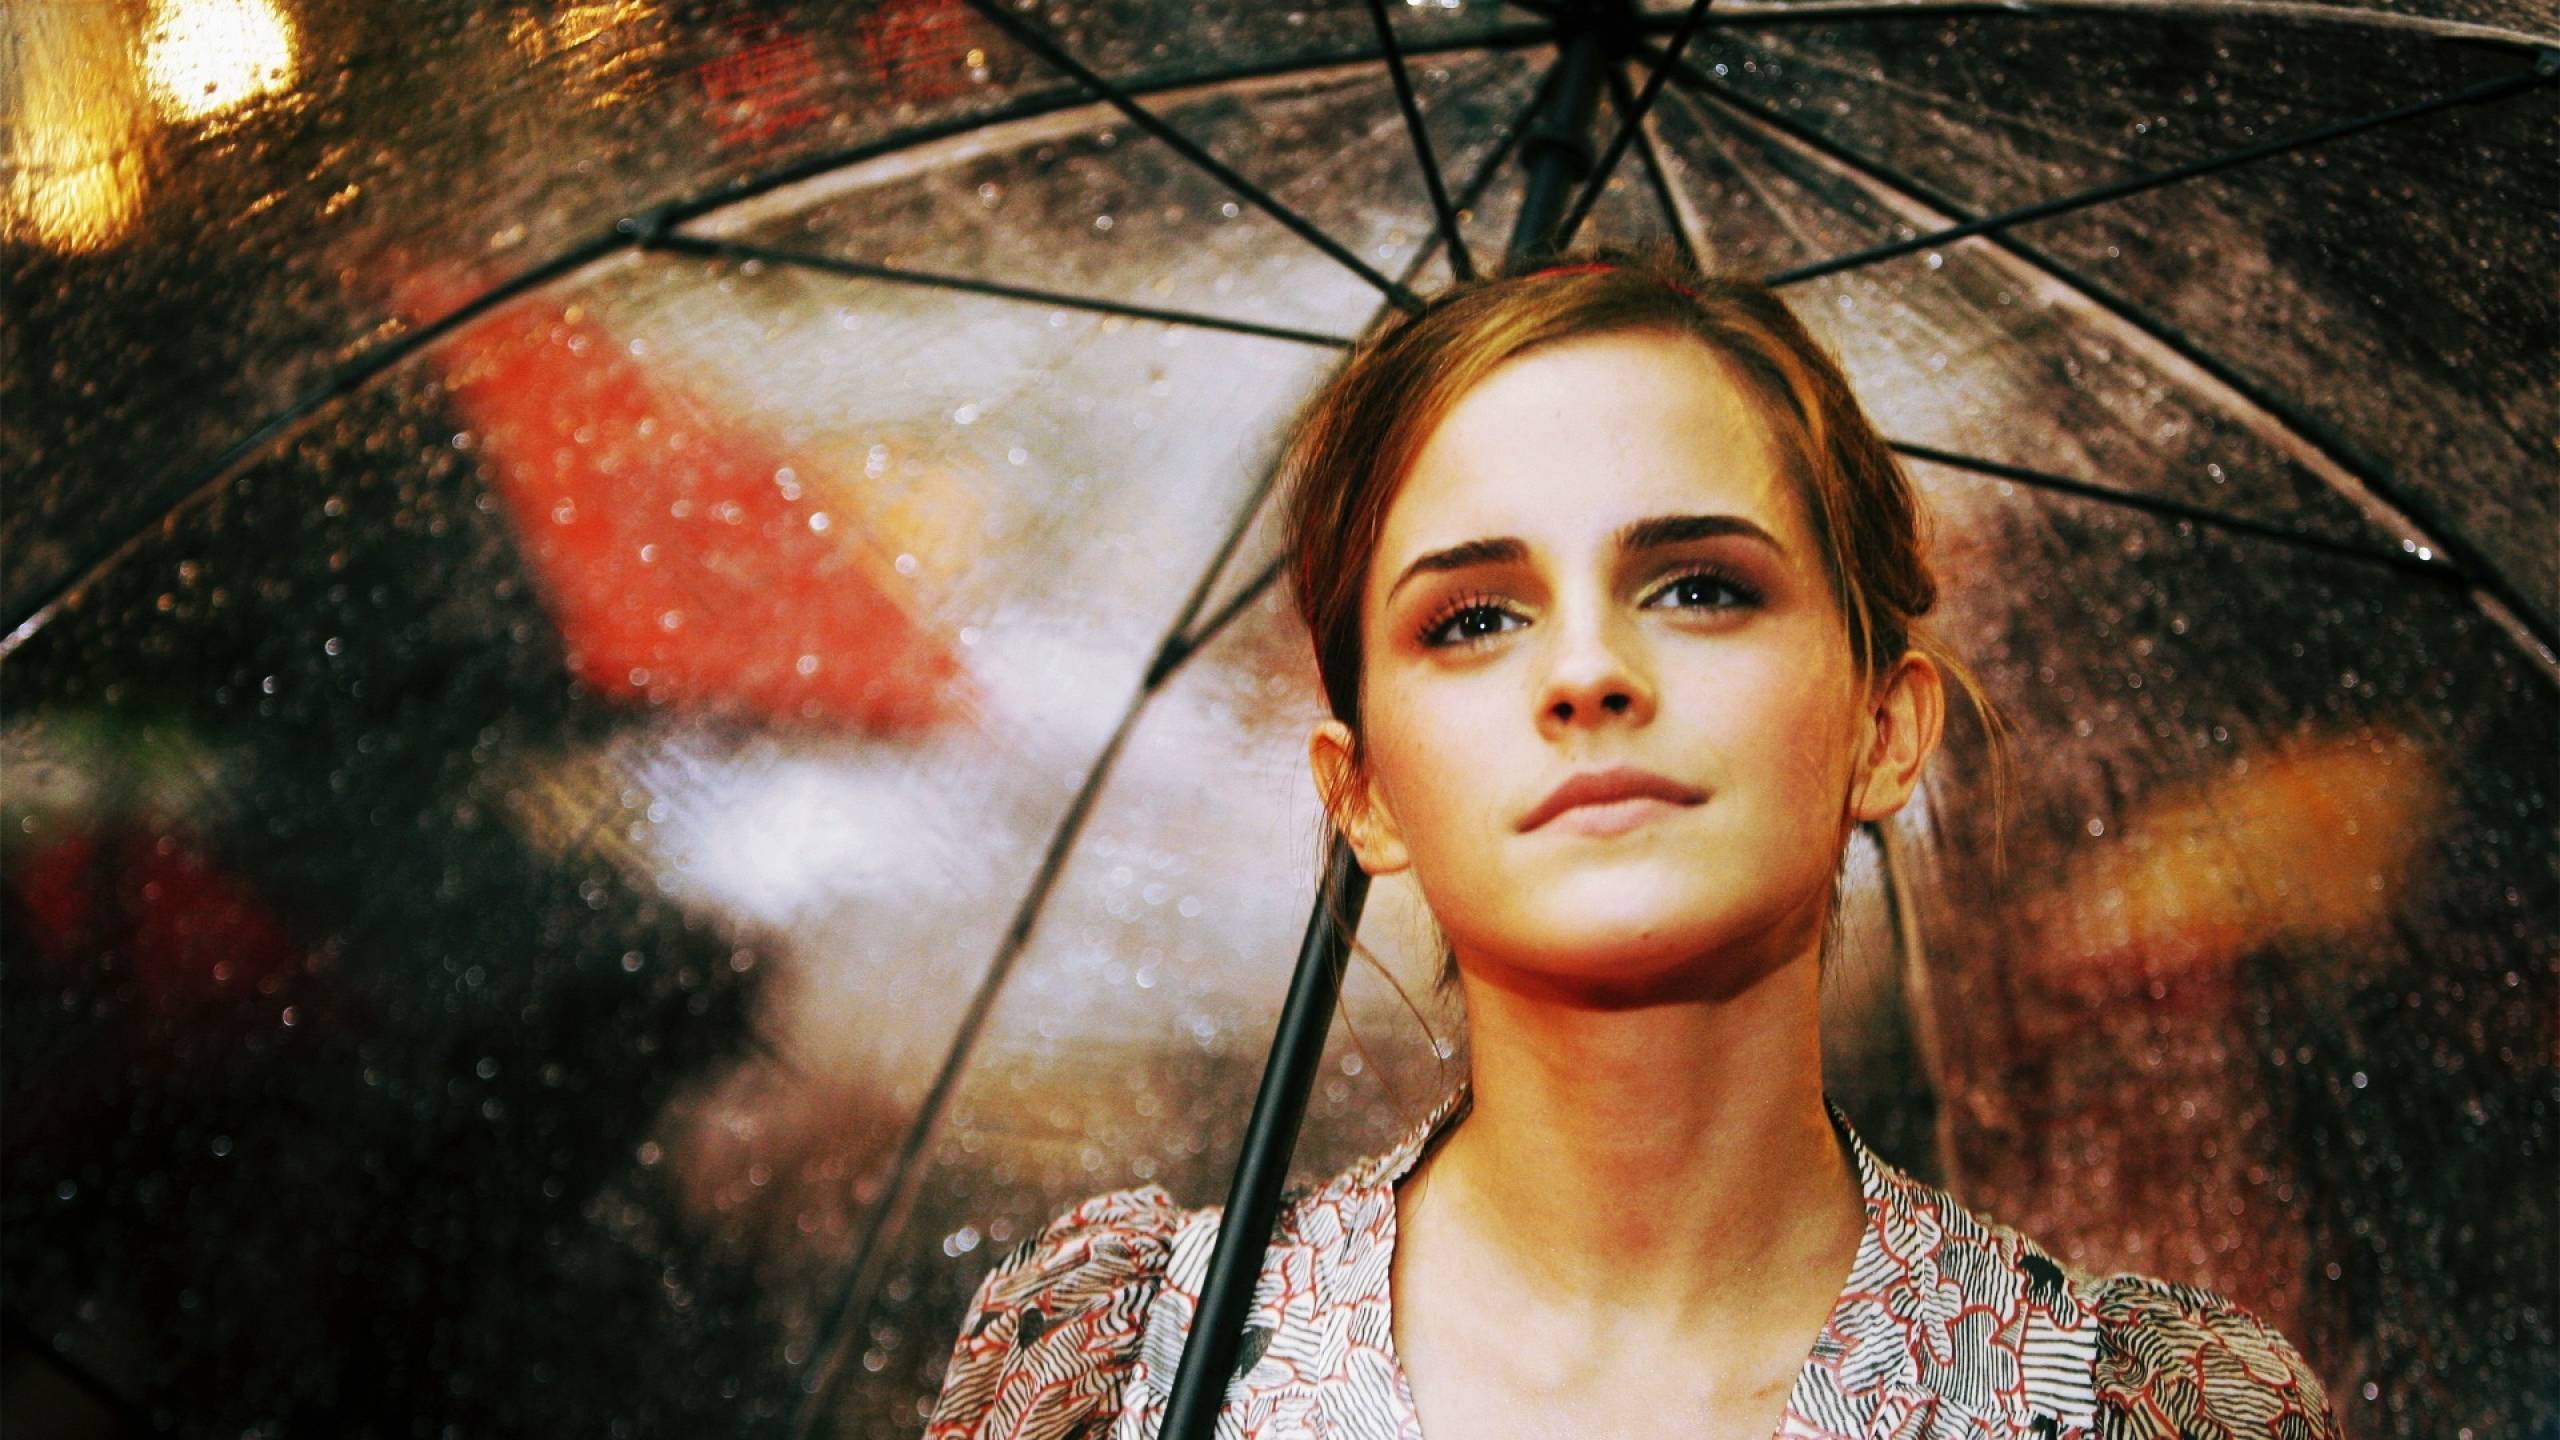 Emma Watson Umbrella for 2560x1440 HDTV resolution